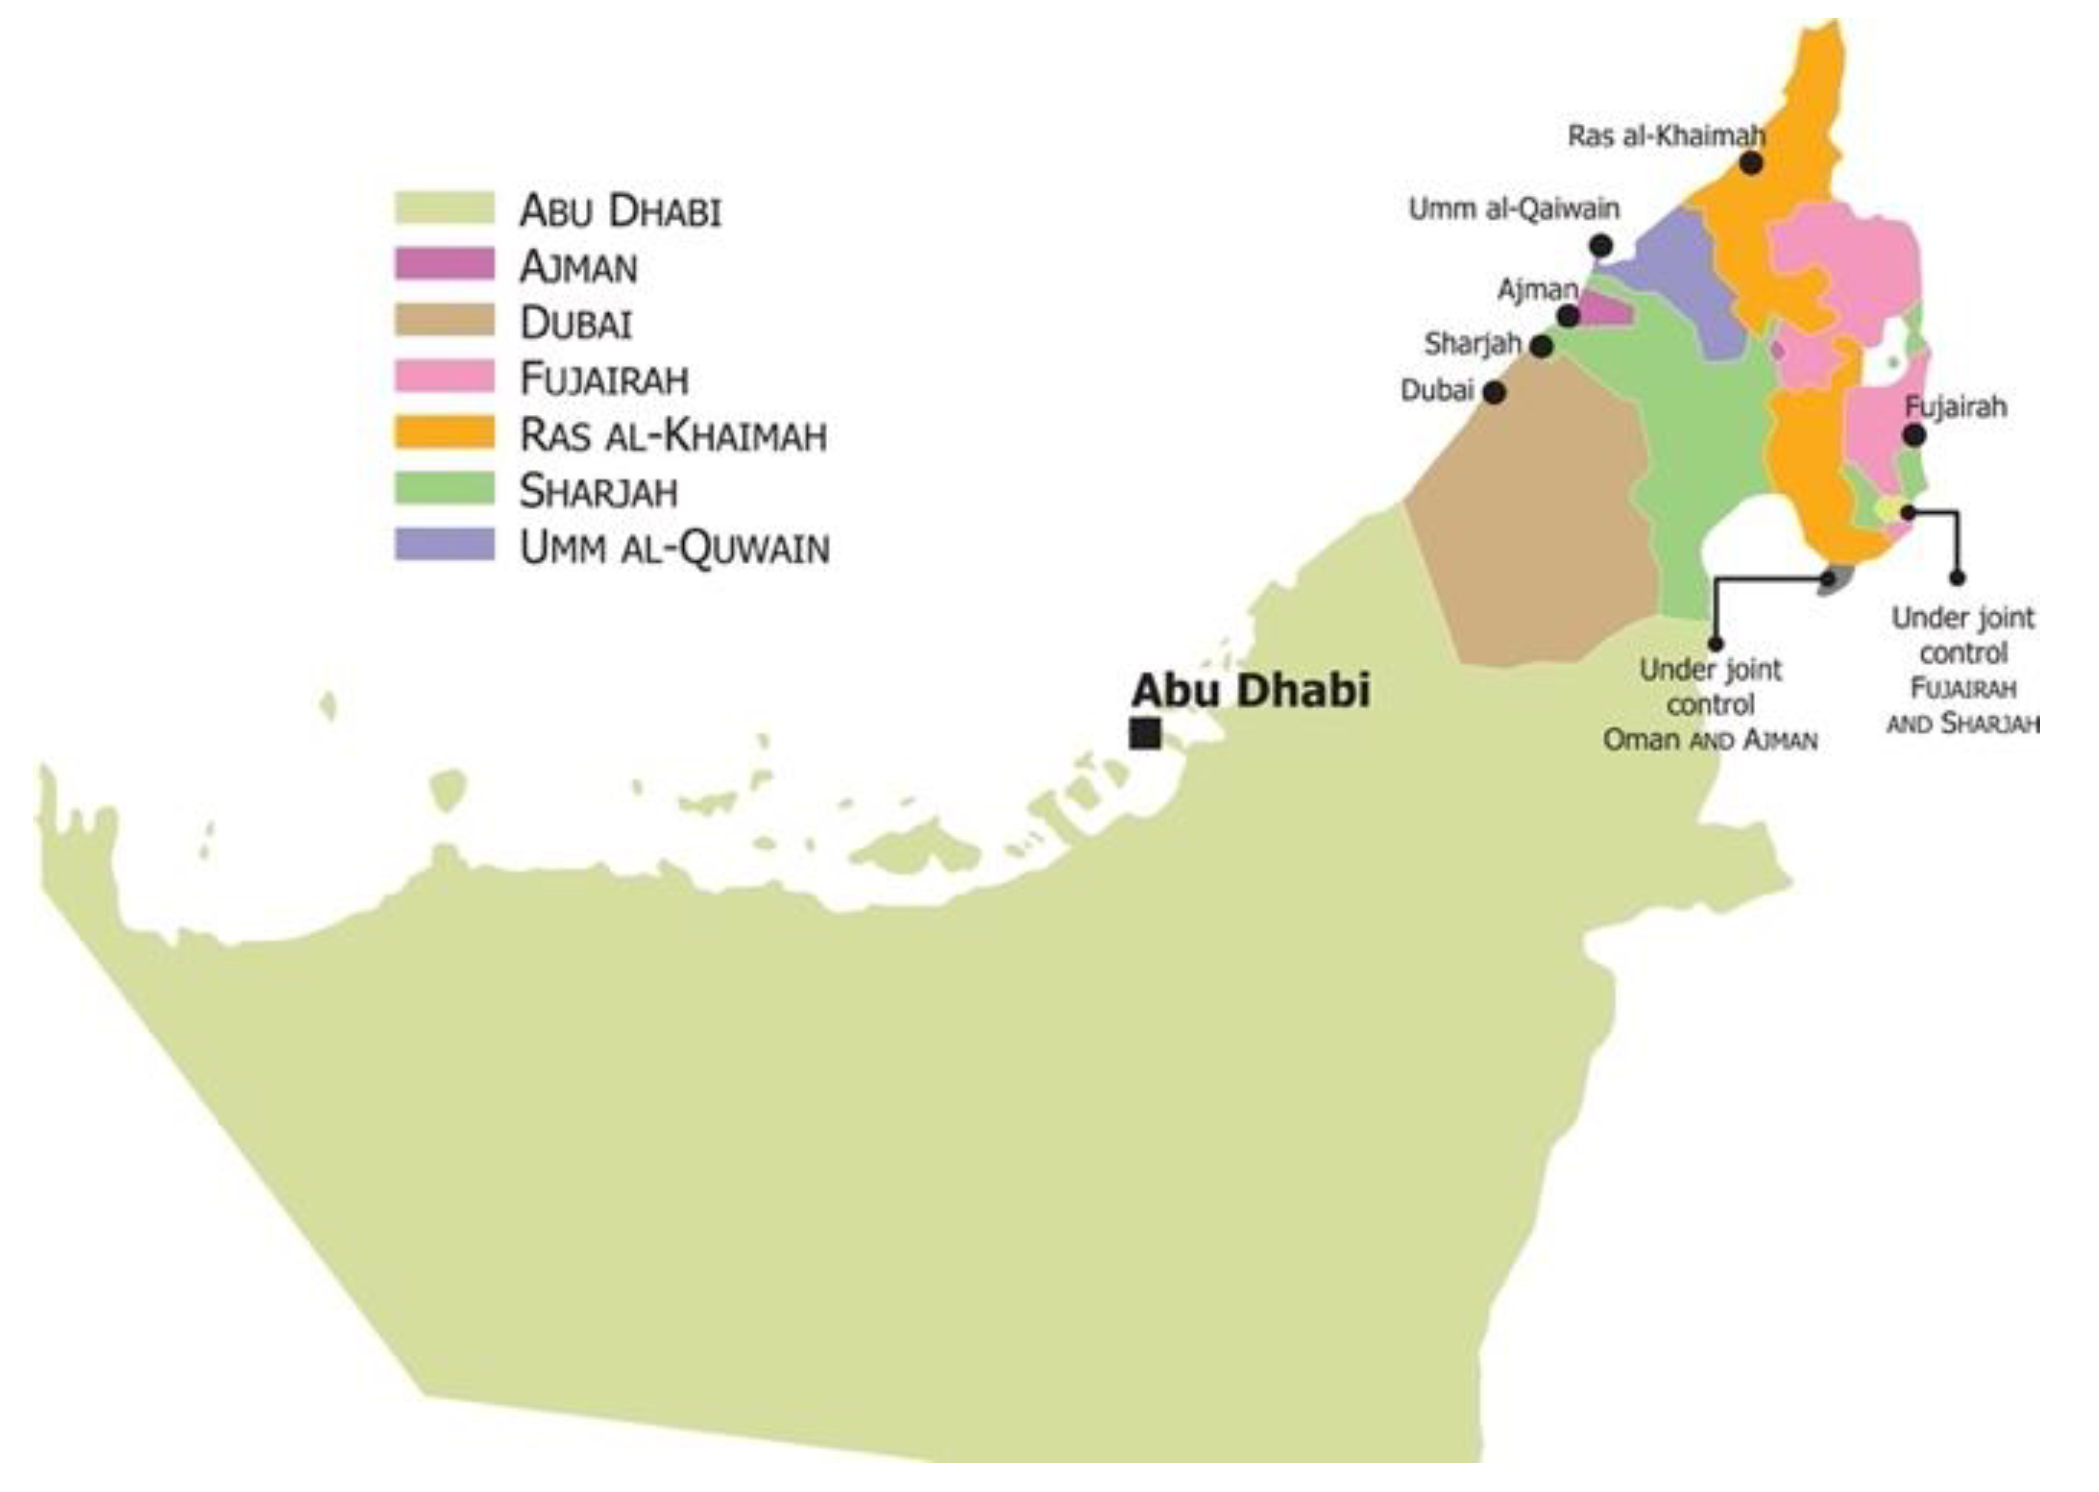 Abu Dhabi, City, History, Economy, Map, & Facts